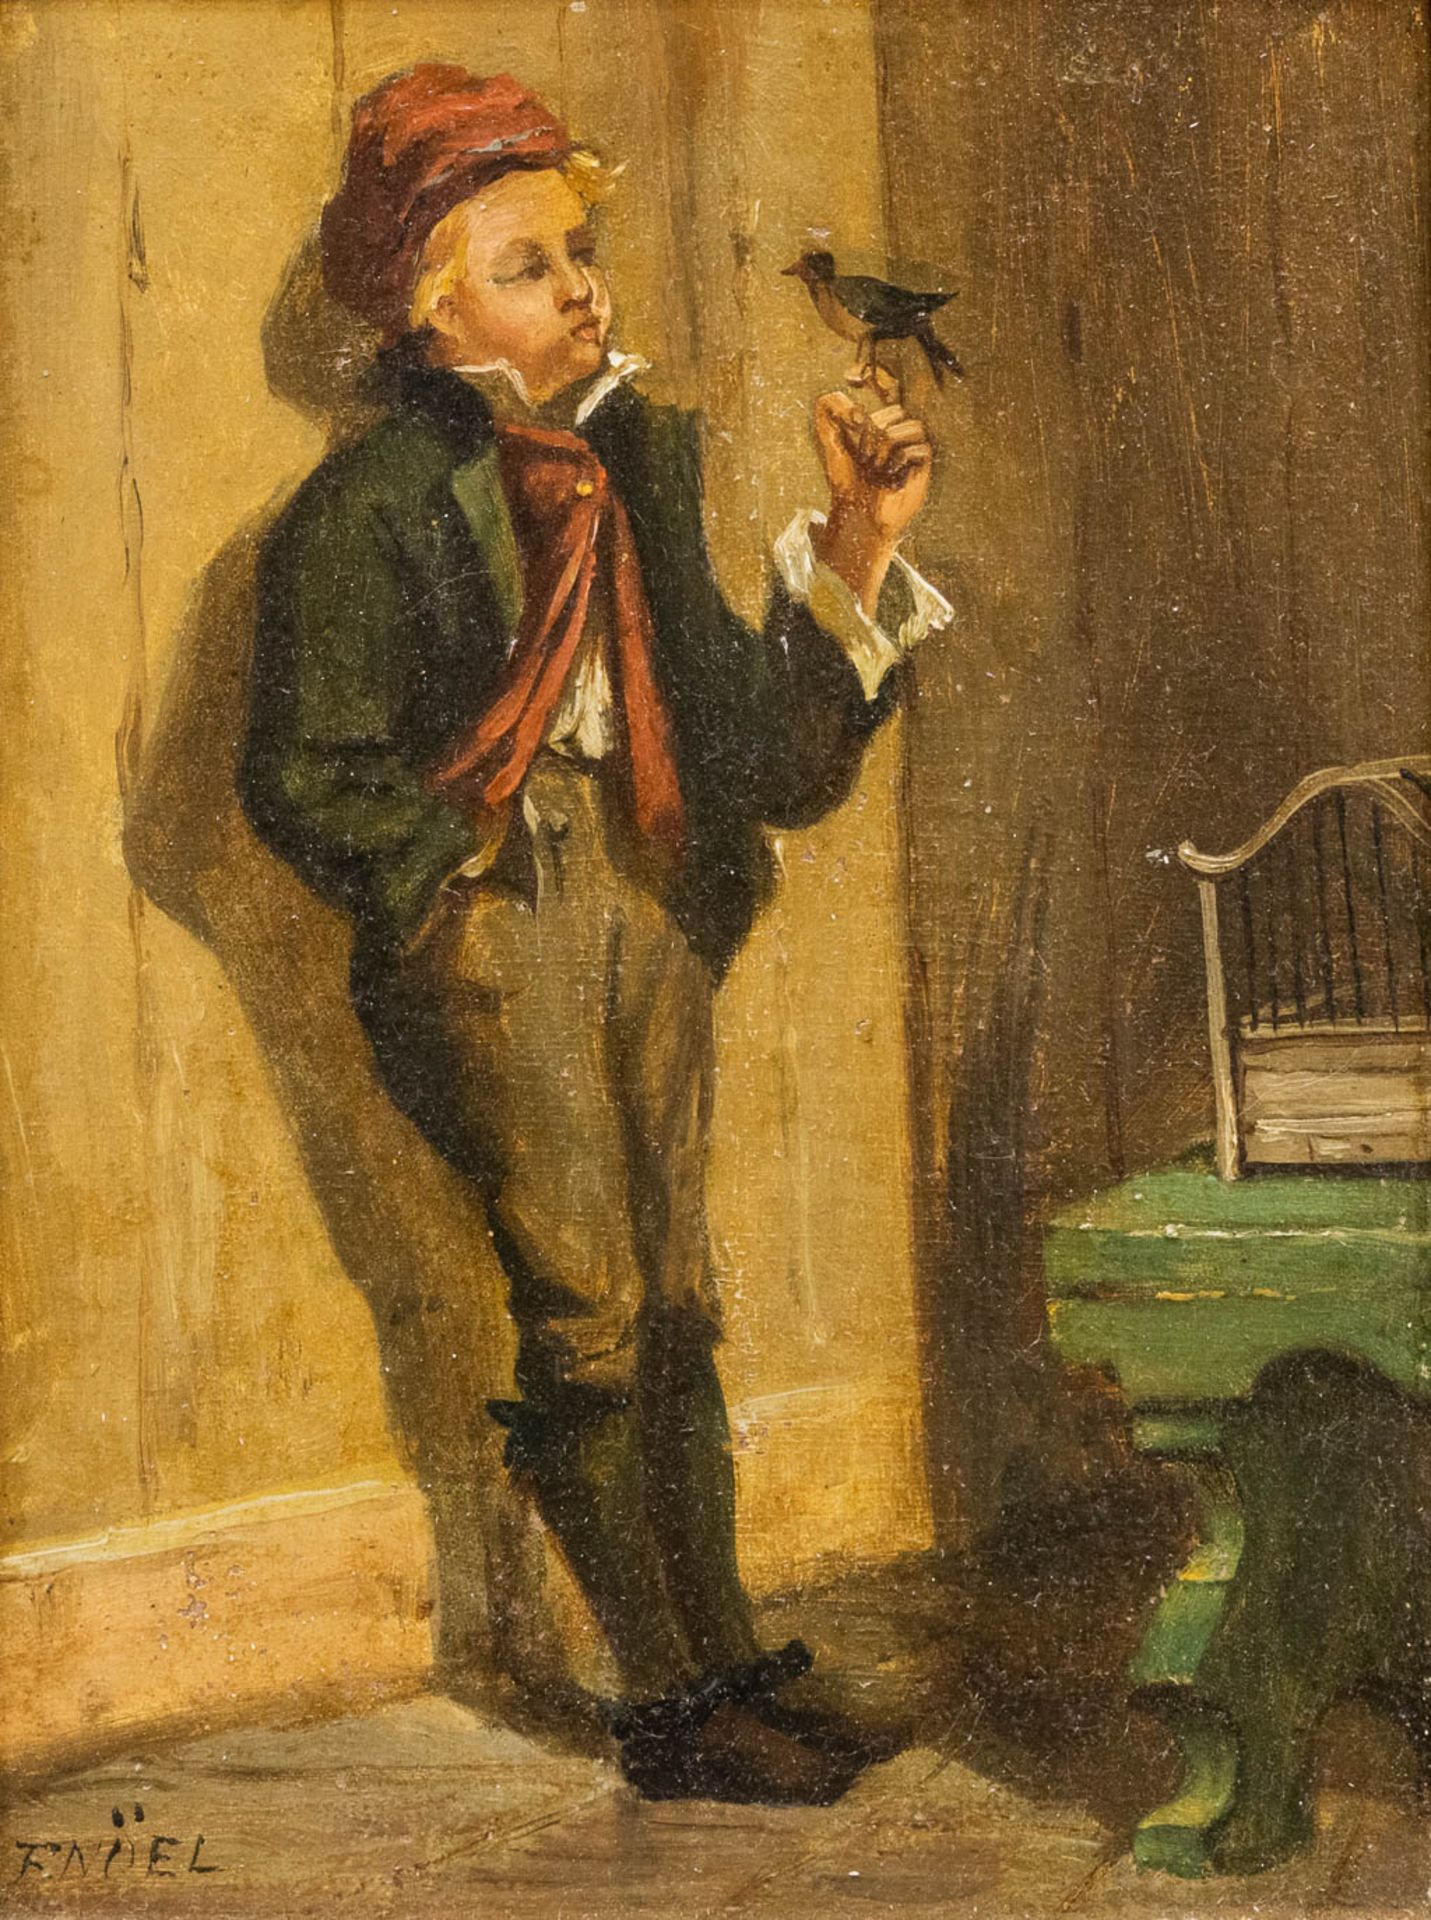 F. NOEL, elegant image of a boy with a bird, oil on panel. (16 x 21 cm)